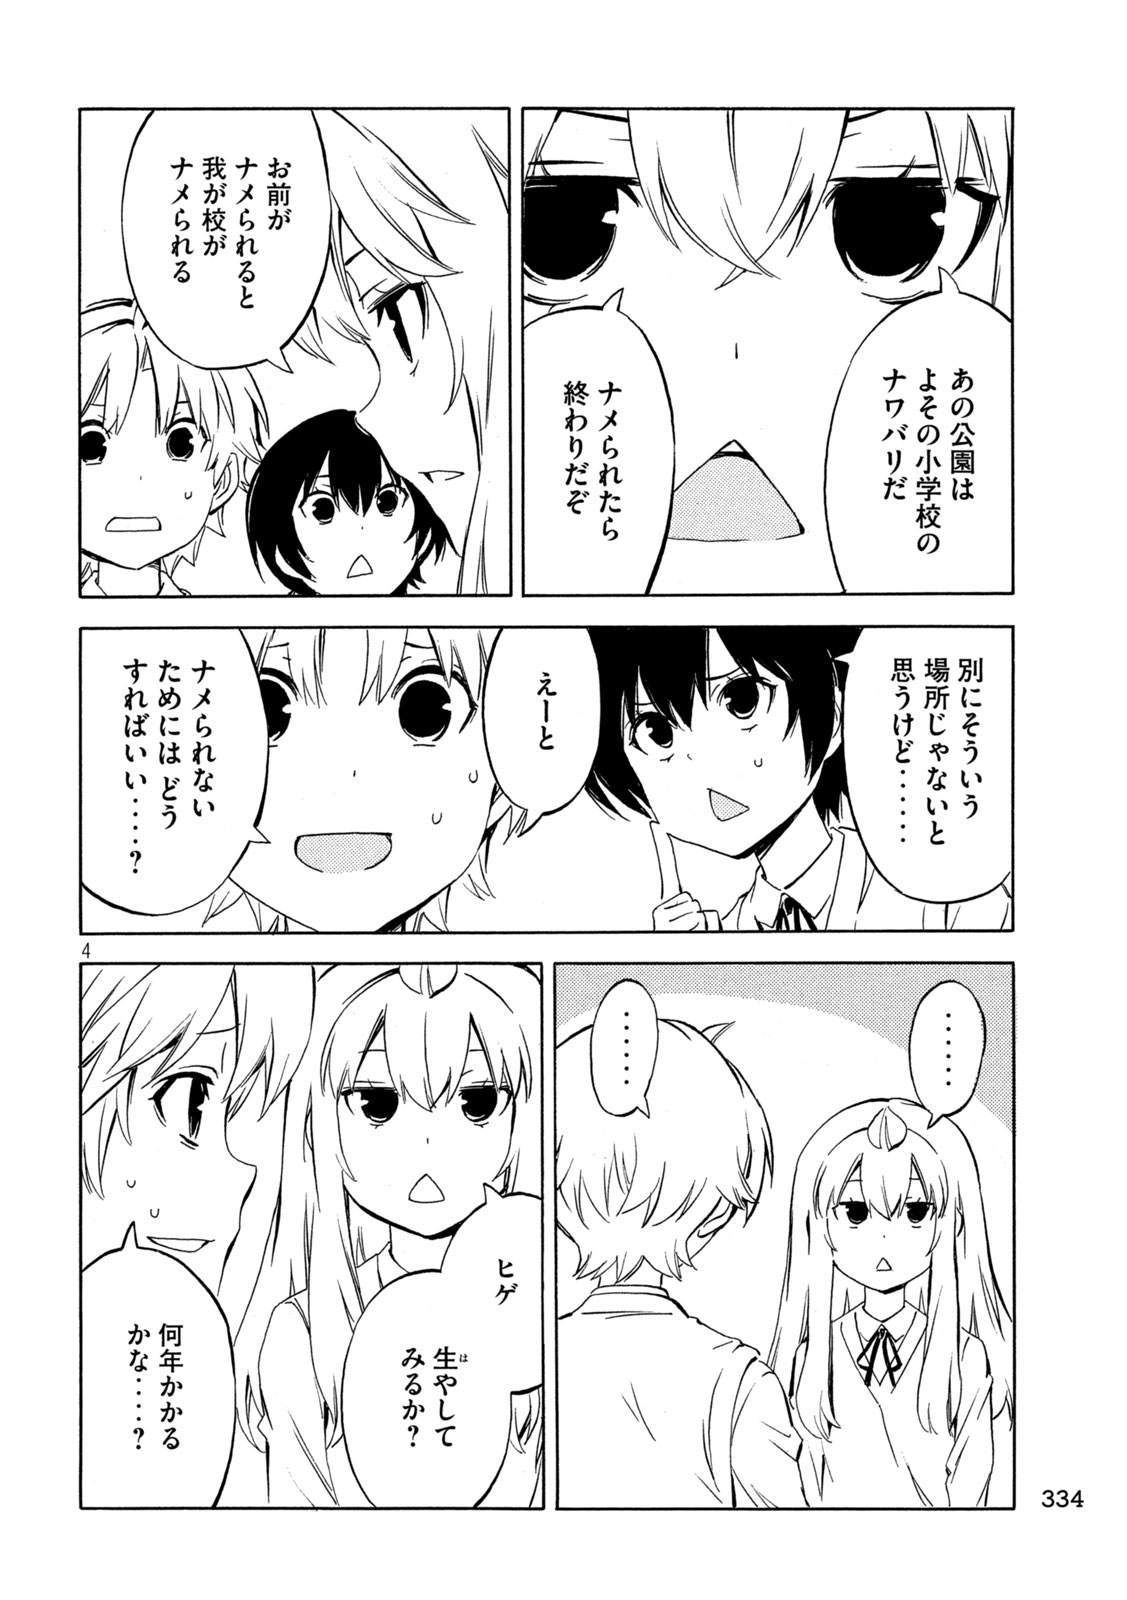 Minami-ke - Chapter 488 - Page 4